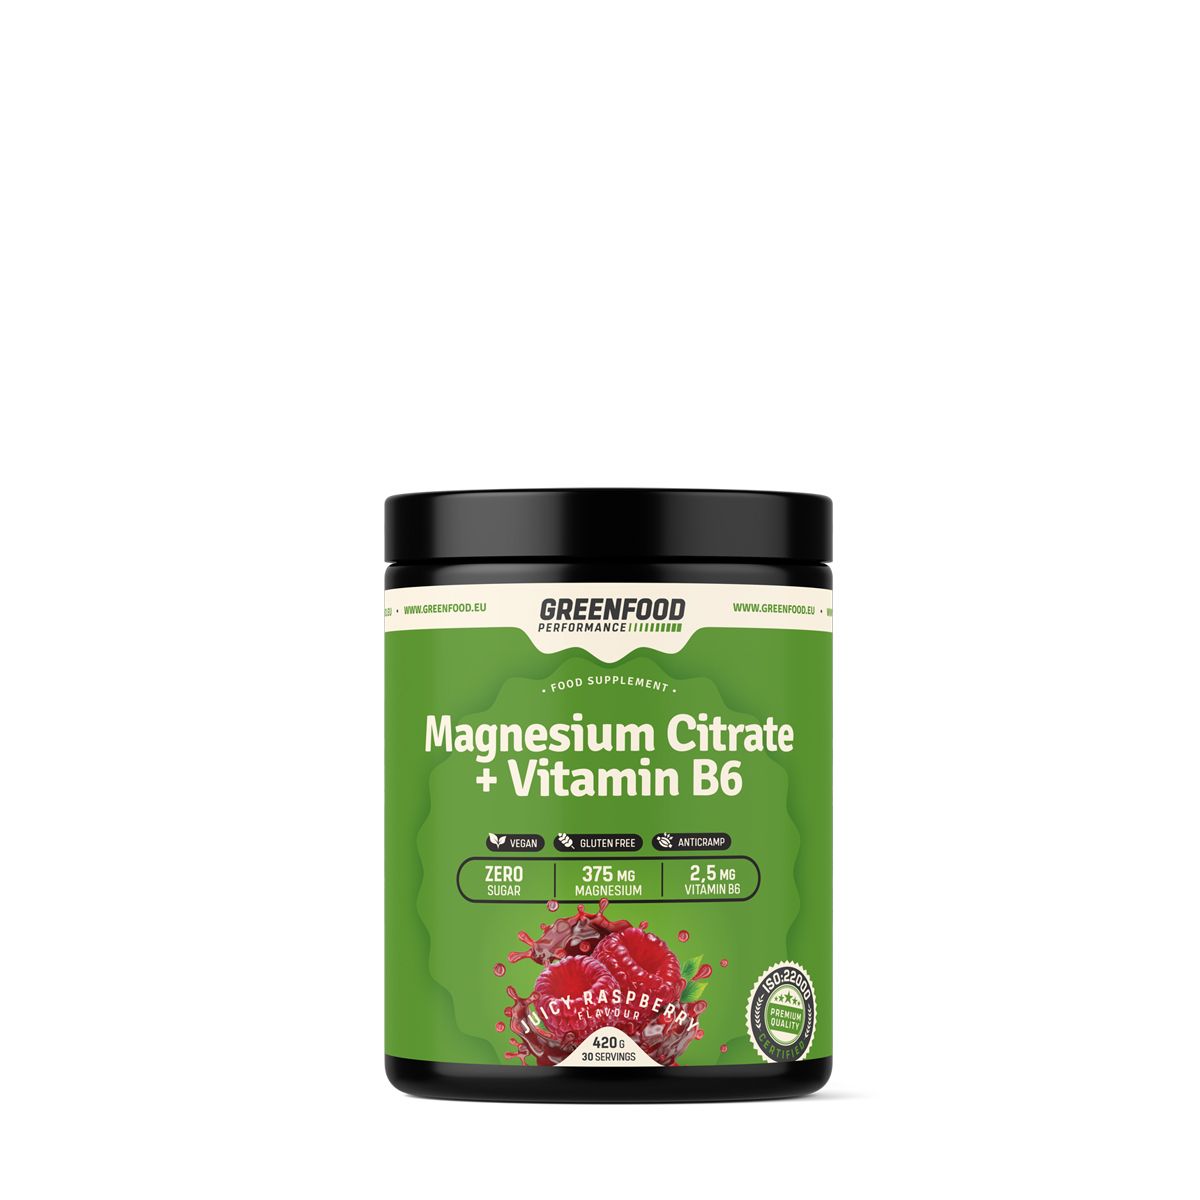 Magnézium citrát italpor izomgörcs ellen B-vitaminnal, GreenFood Performance Magnesium Citrate, 420 g